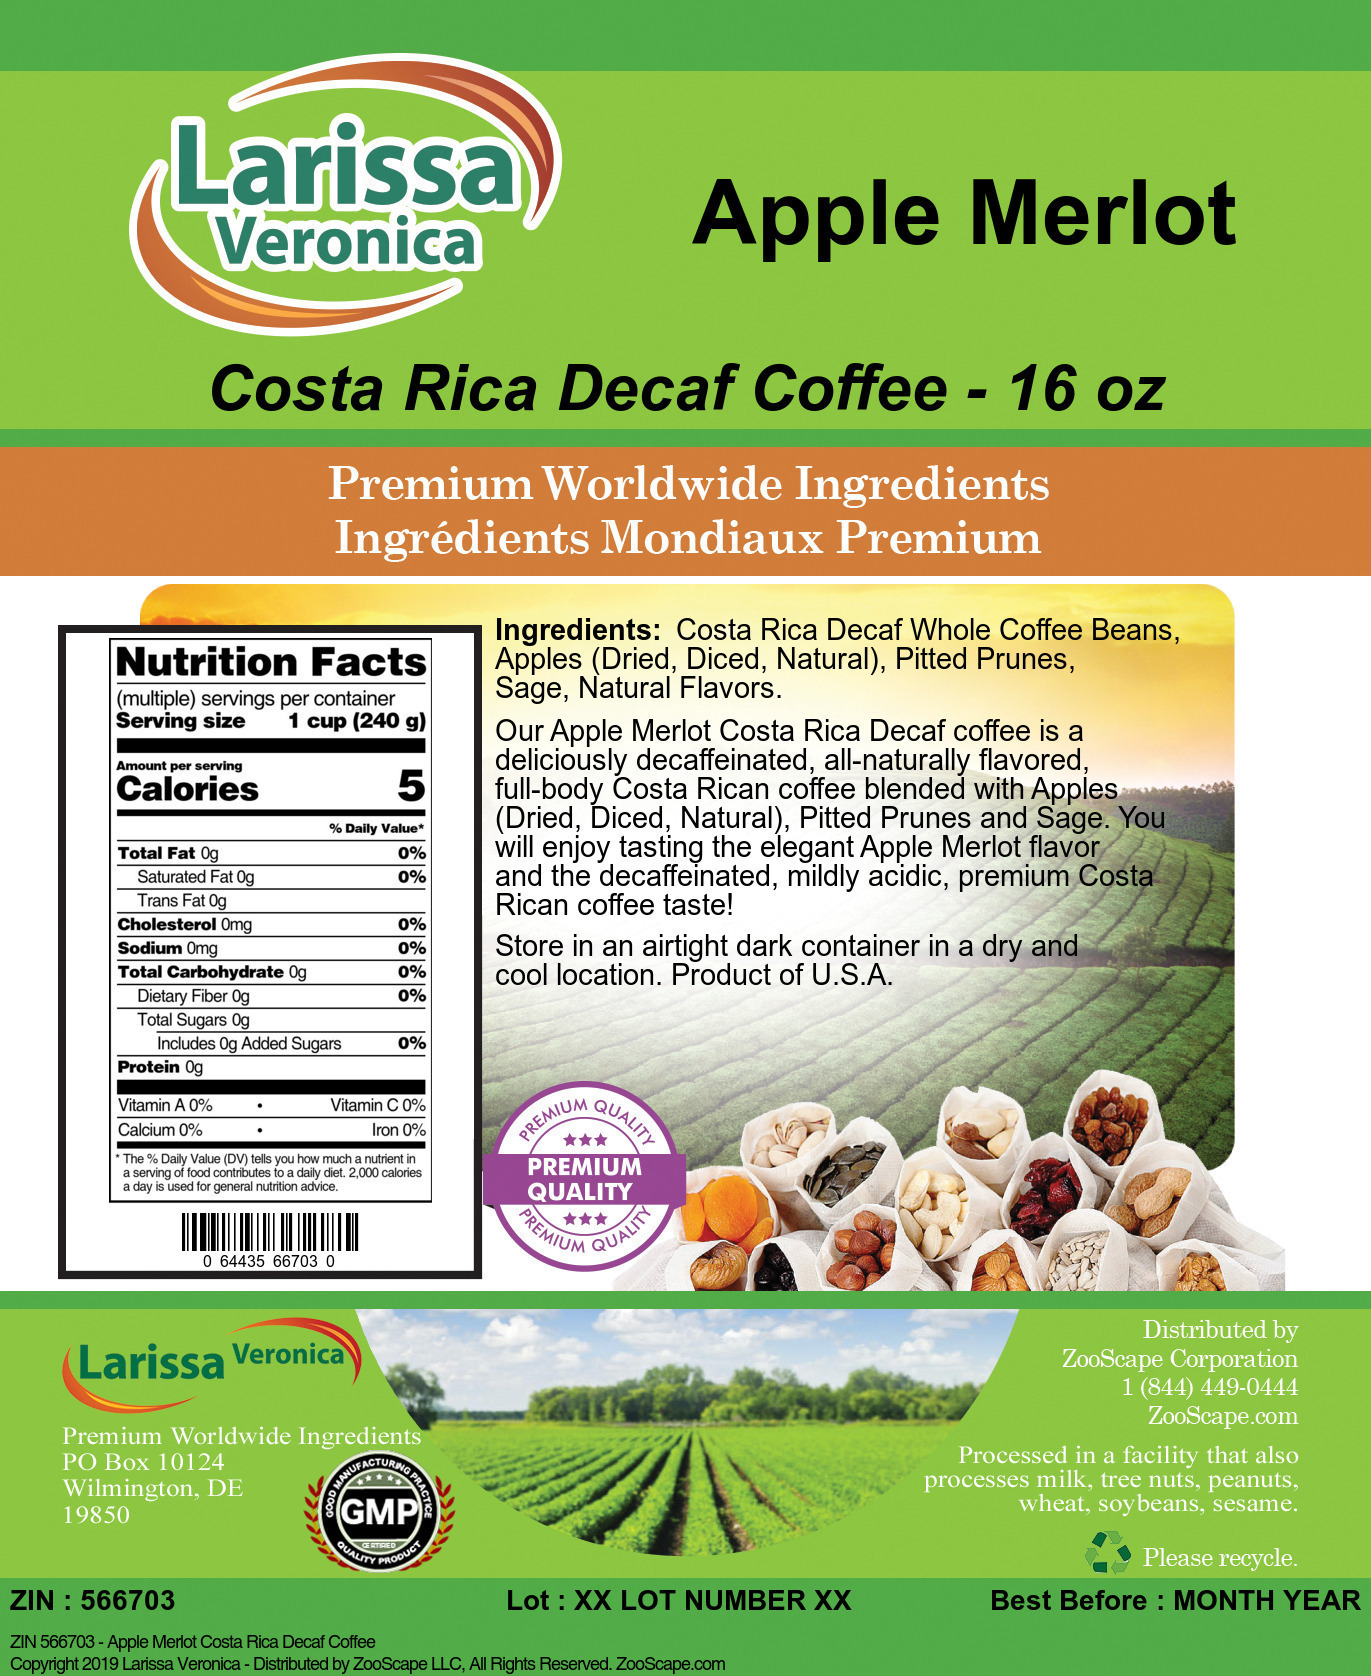 Apple Merlot Costa Rica Decaf Coffee - Label